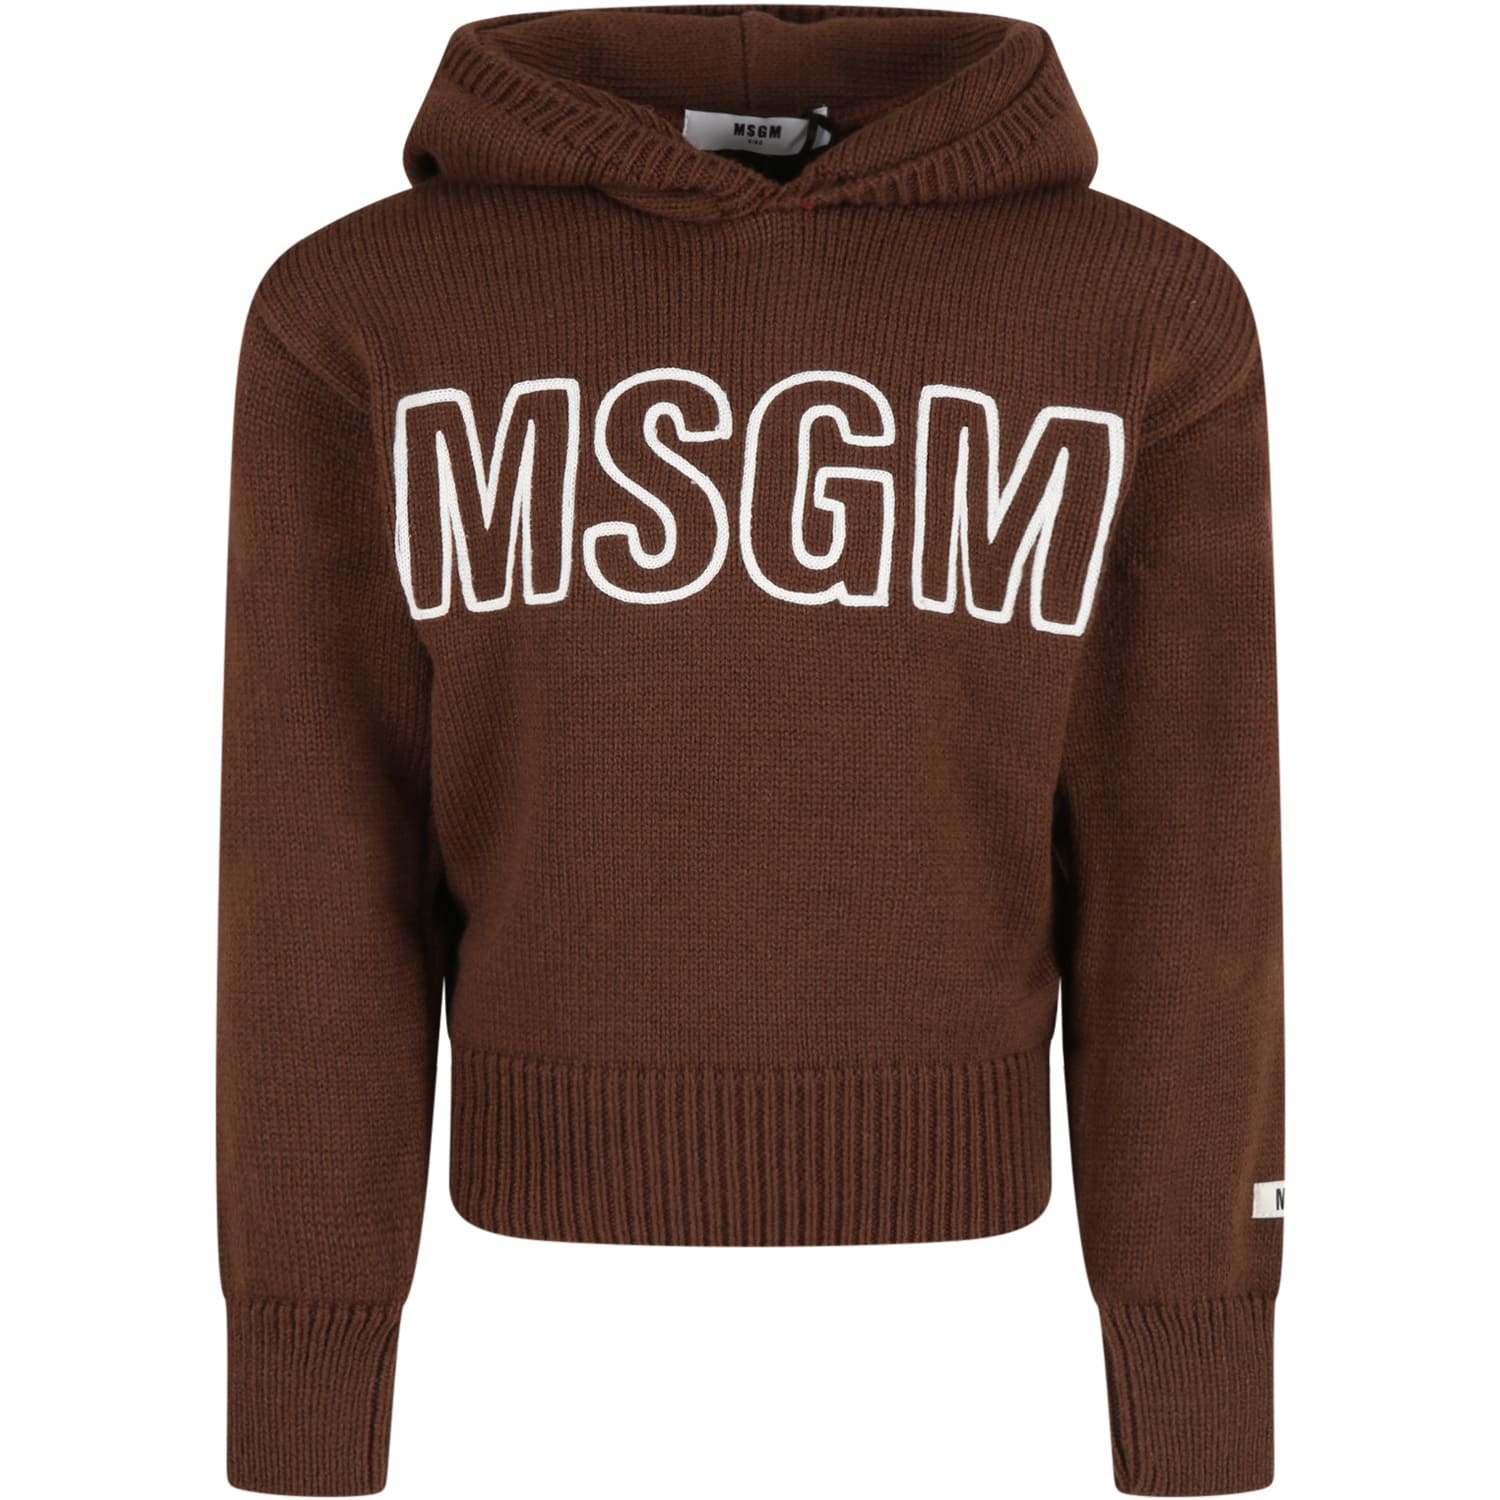 MSGM Brown Sweatshirt For Kids With White Logo